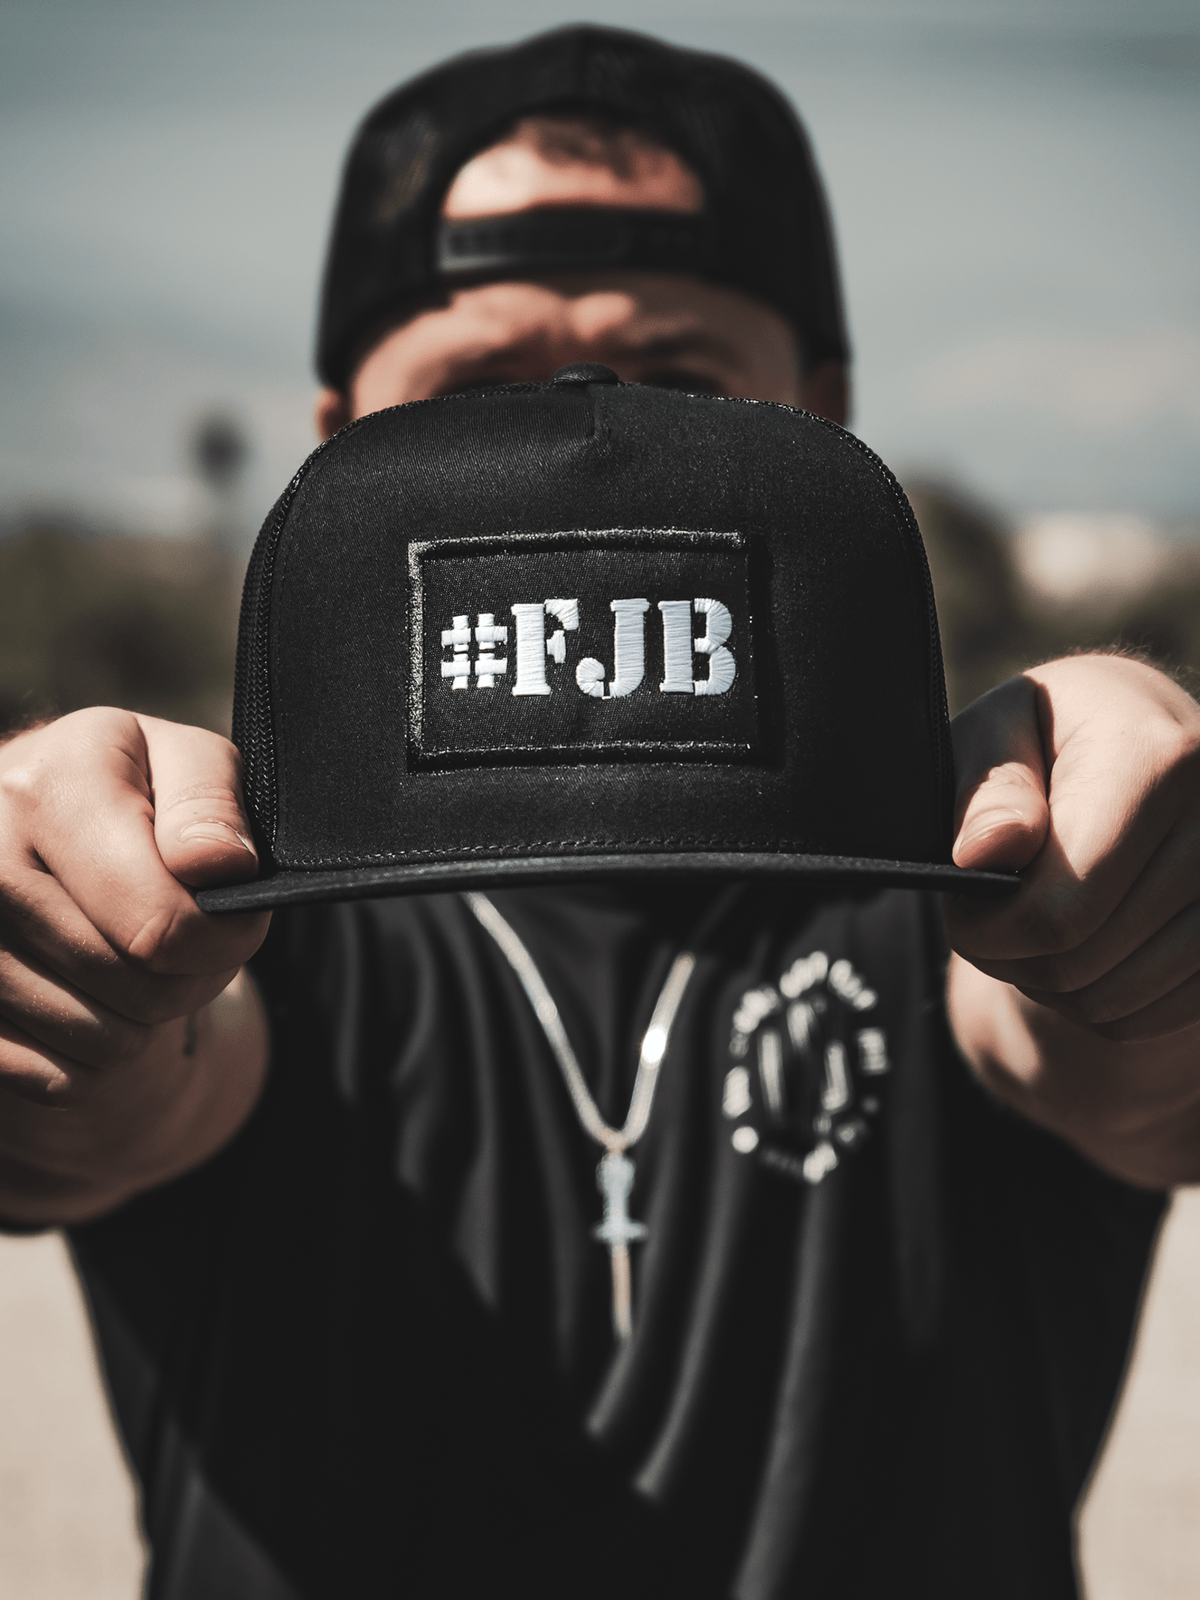 Lions Not Sheep ® FABRIC BACK #FJB Hat (All Black)